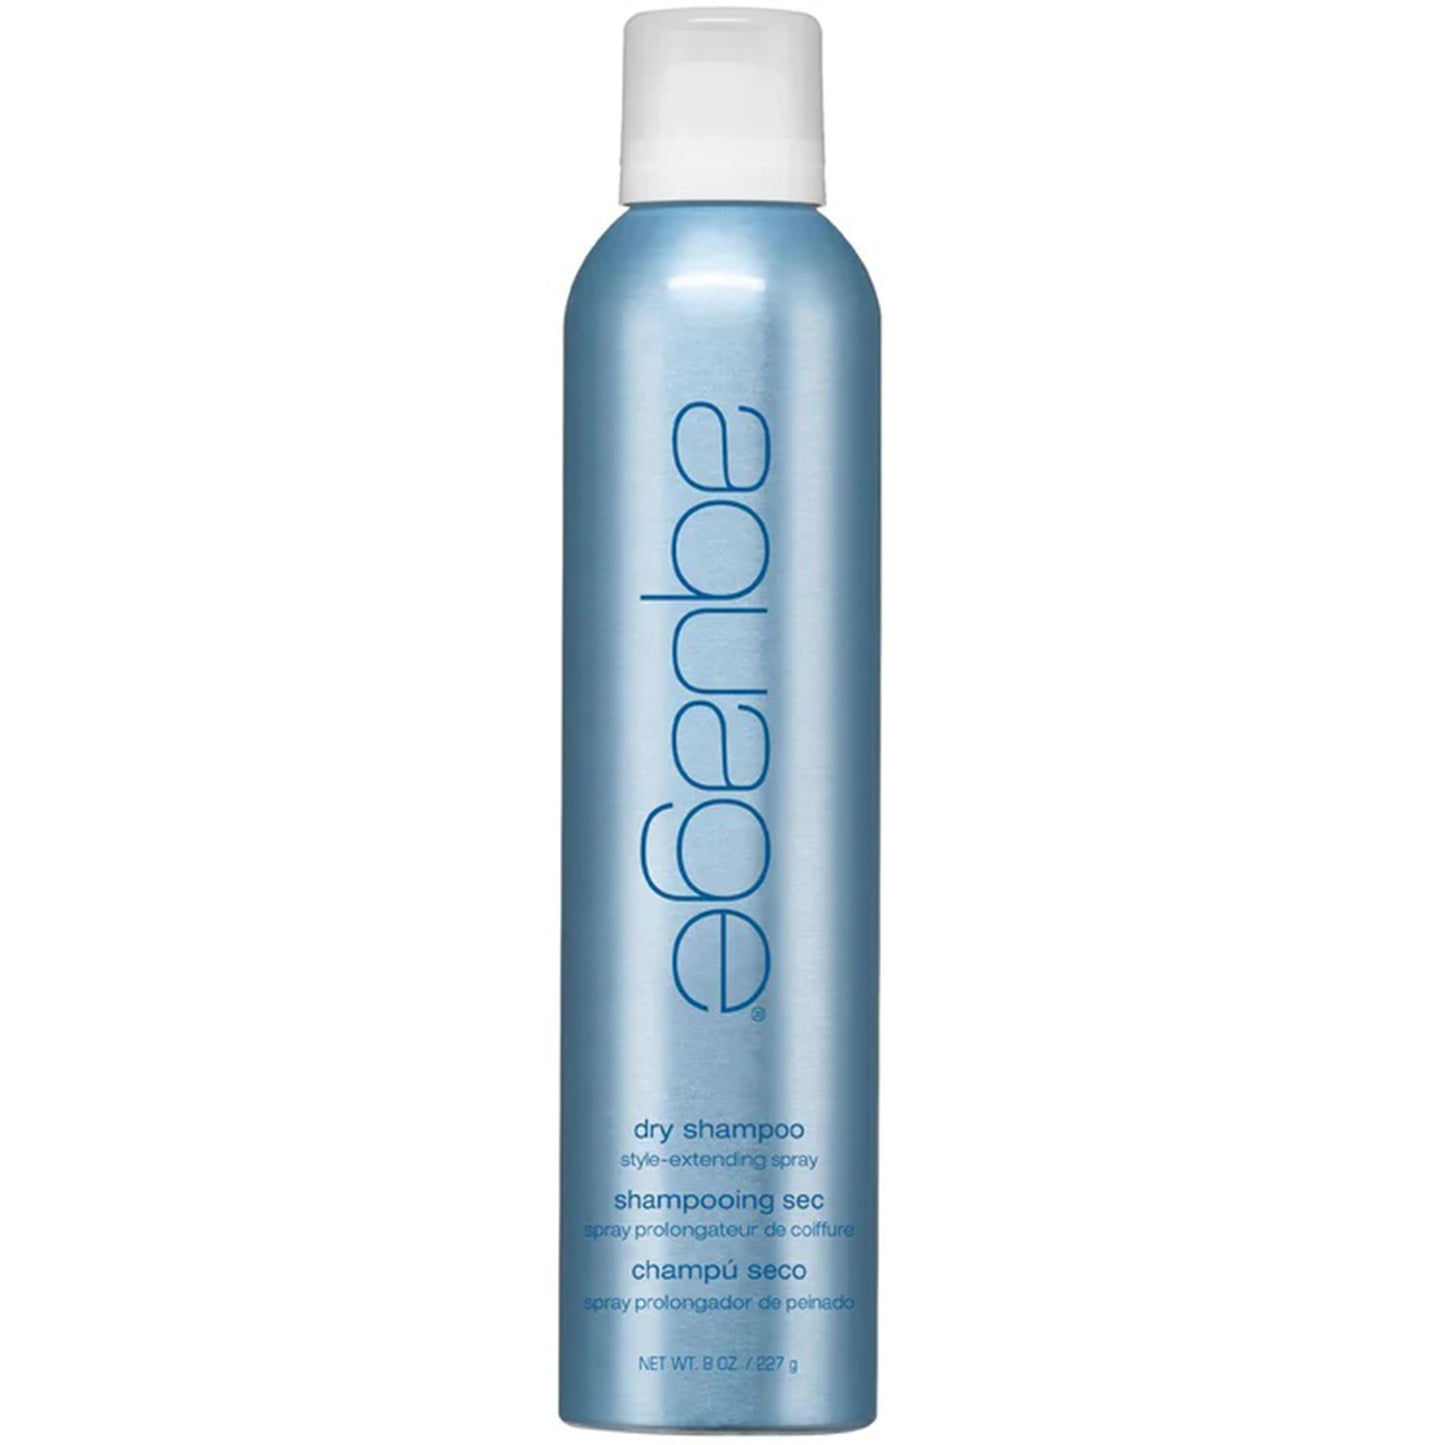 Aquage Dry Shampoo Style Extended Spray 227 g / 8 oz